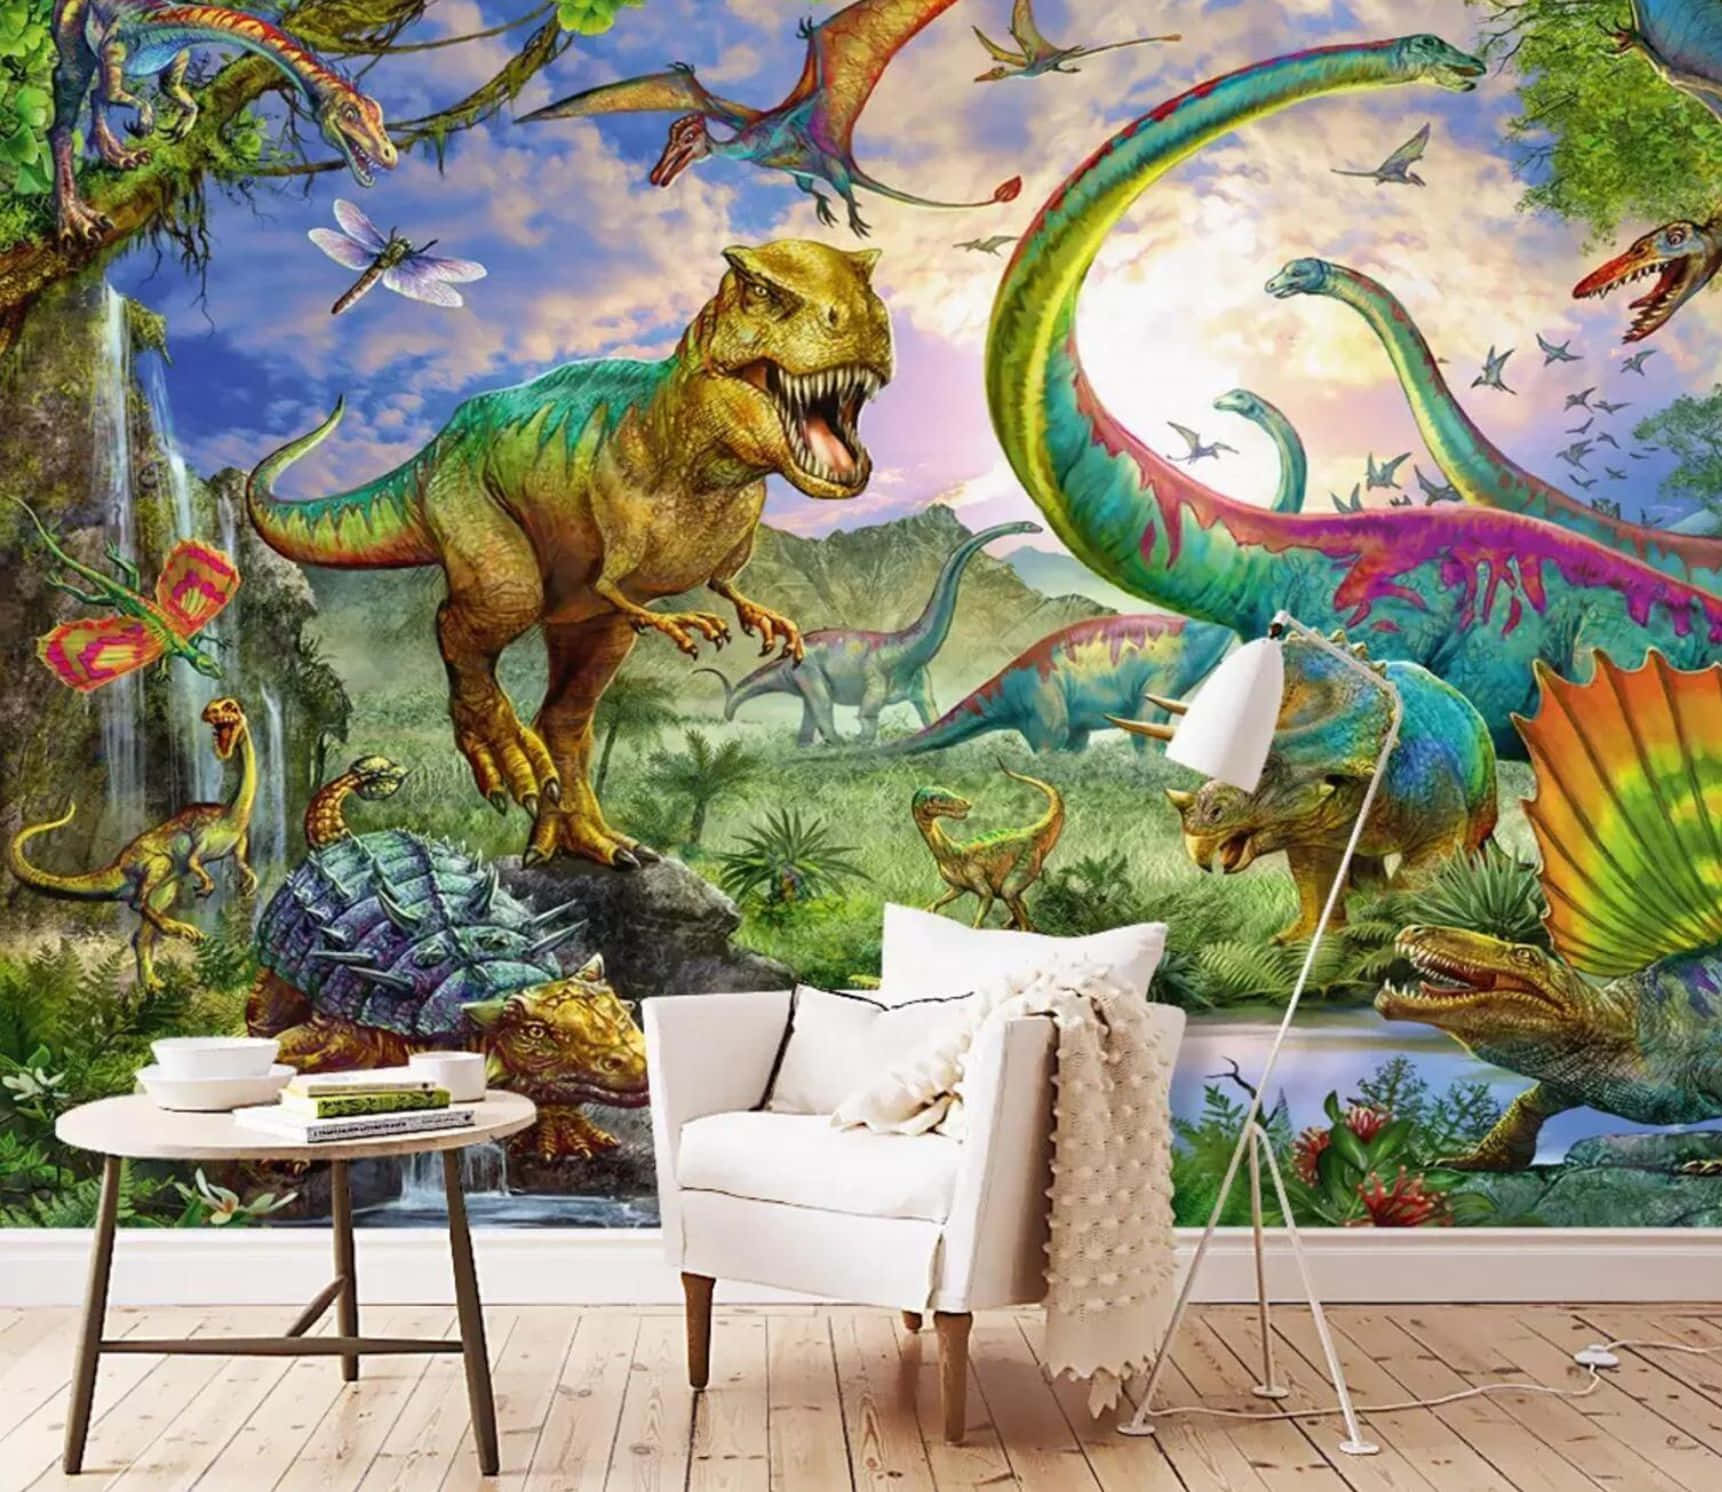 Realistic 3D Dinosaur Roaring in a Lush Environment Wallpaper